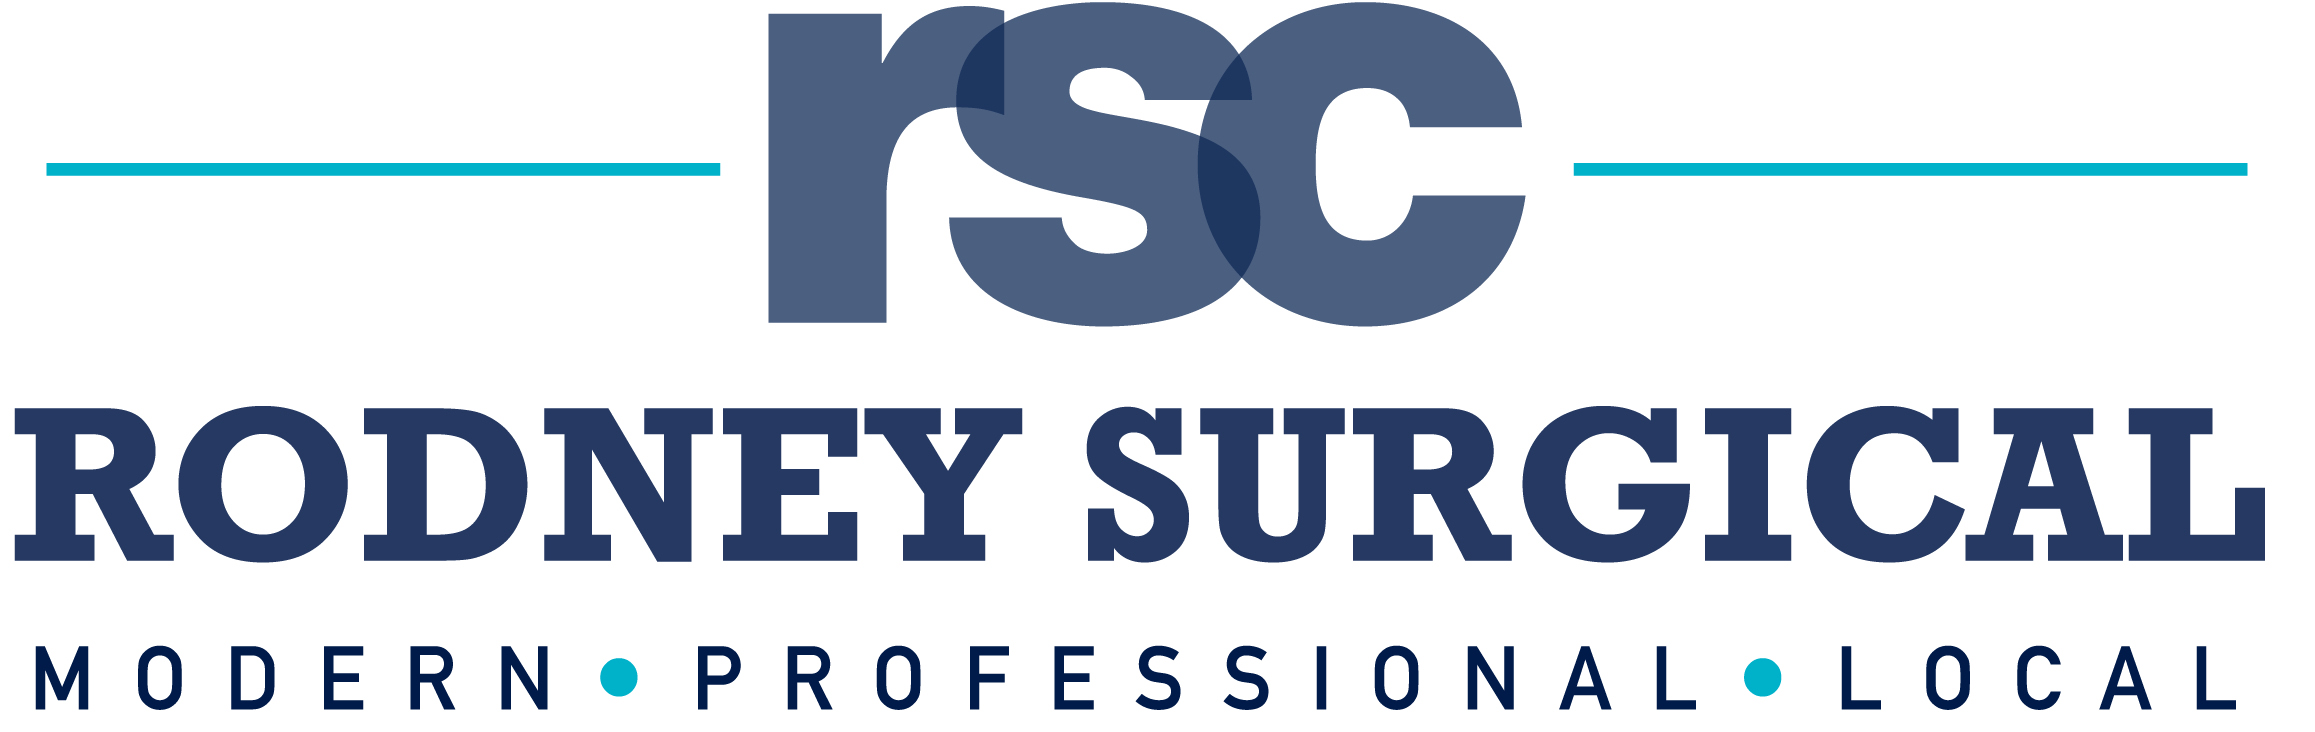 Rodney Surgical Centre Business Logo - Xtra Marketing Partner